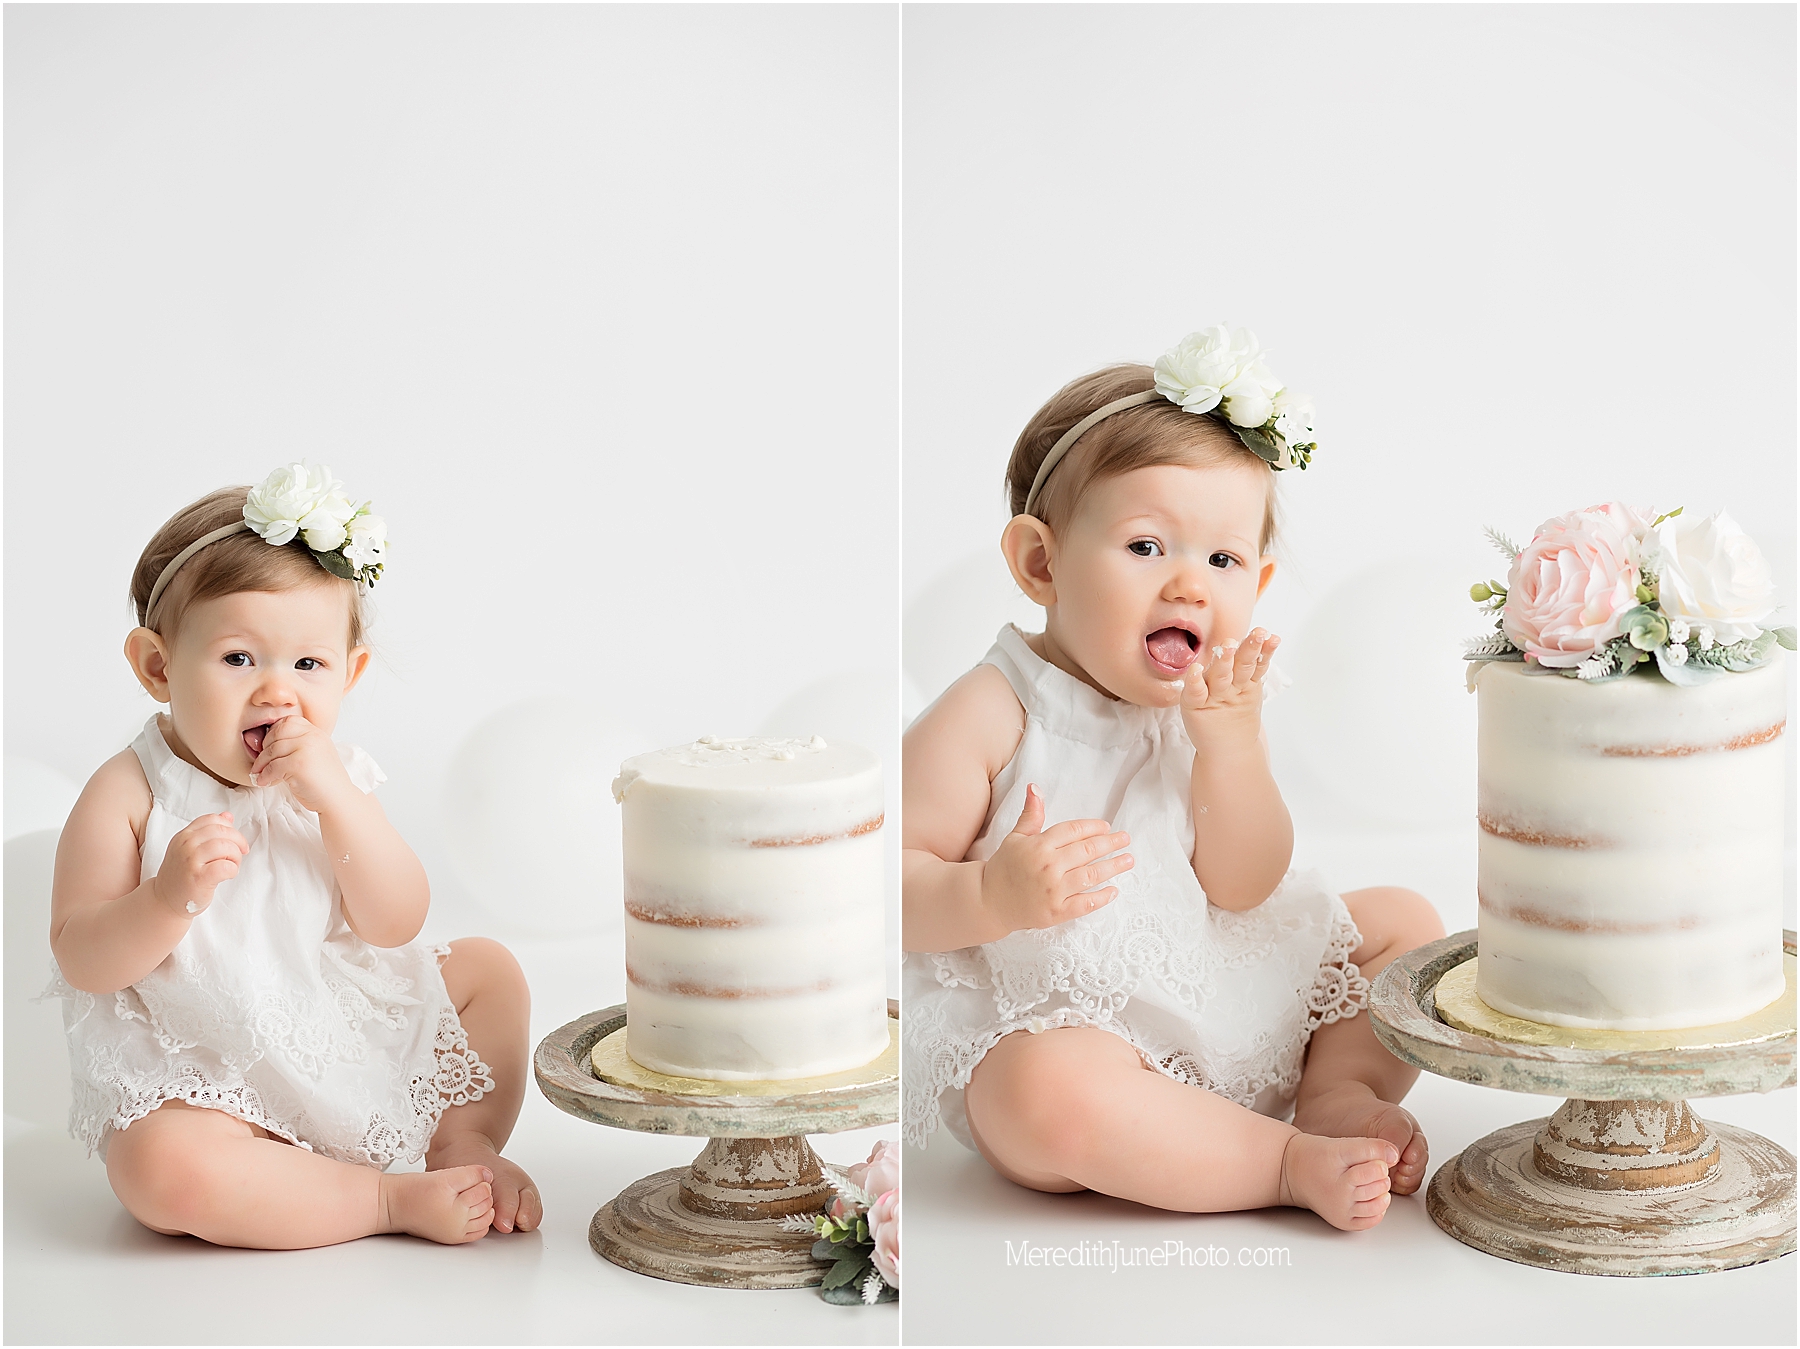 Cake smash session for baby girl 